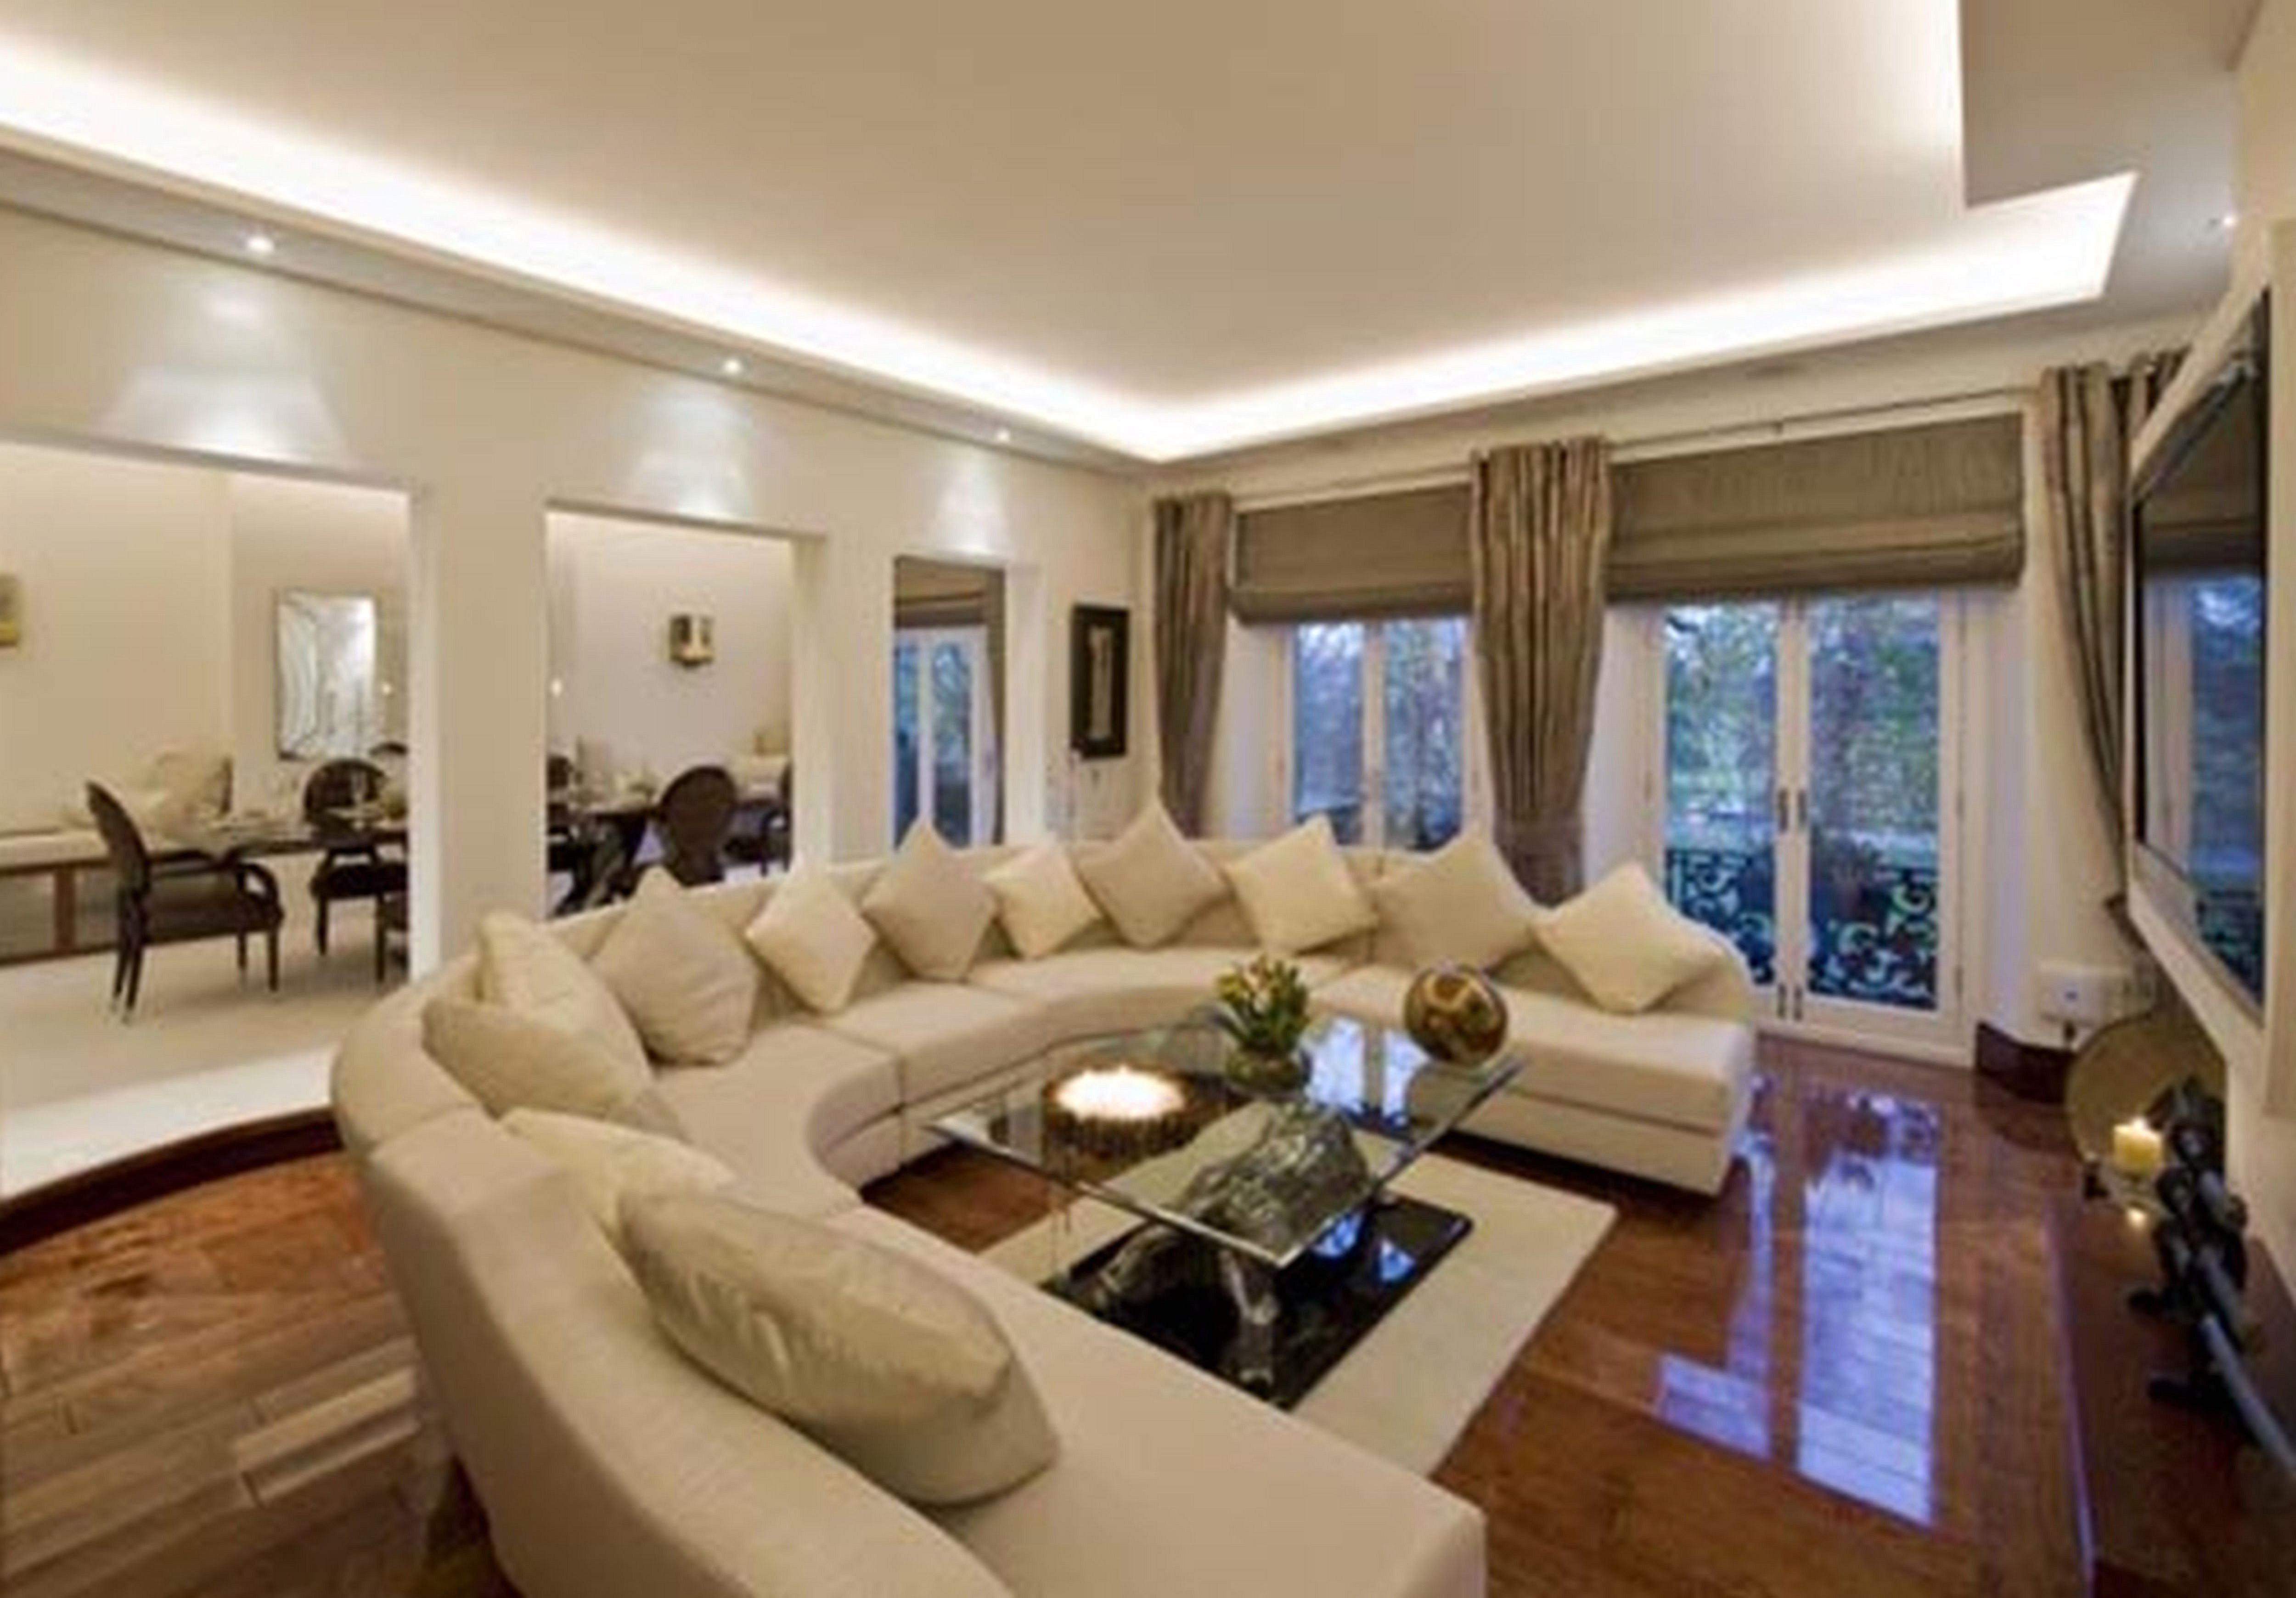 10 Fantastic Large Living Room Decorating Ideas hgtv decorating ideas for living rooms living room decorating ideas 2022